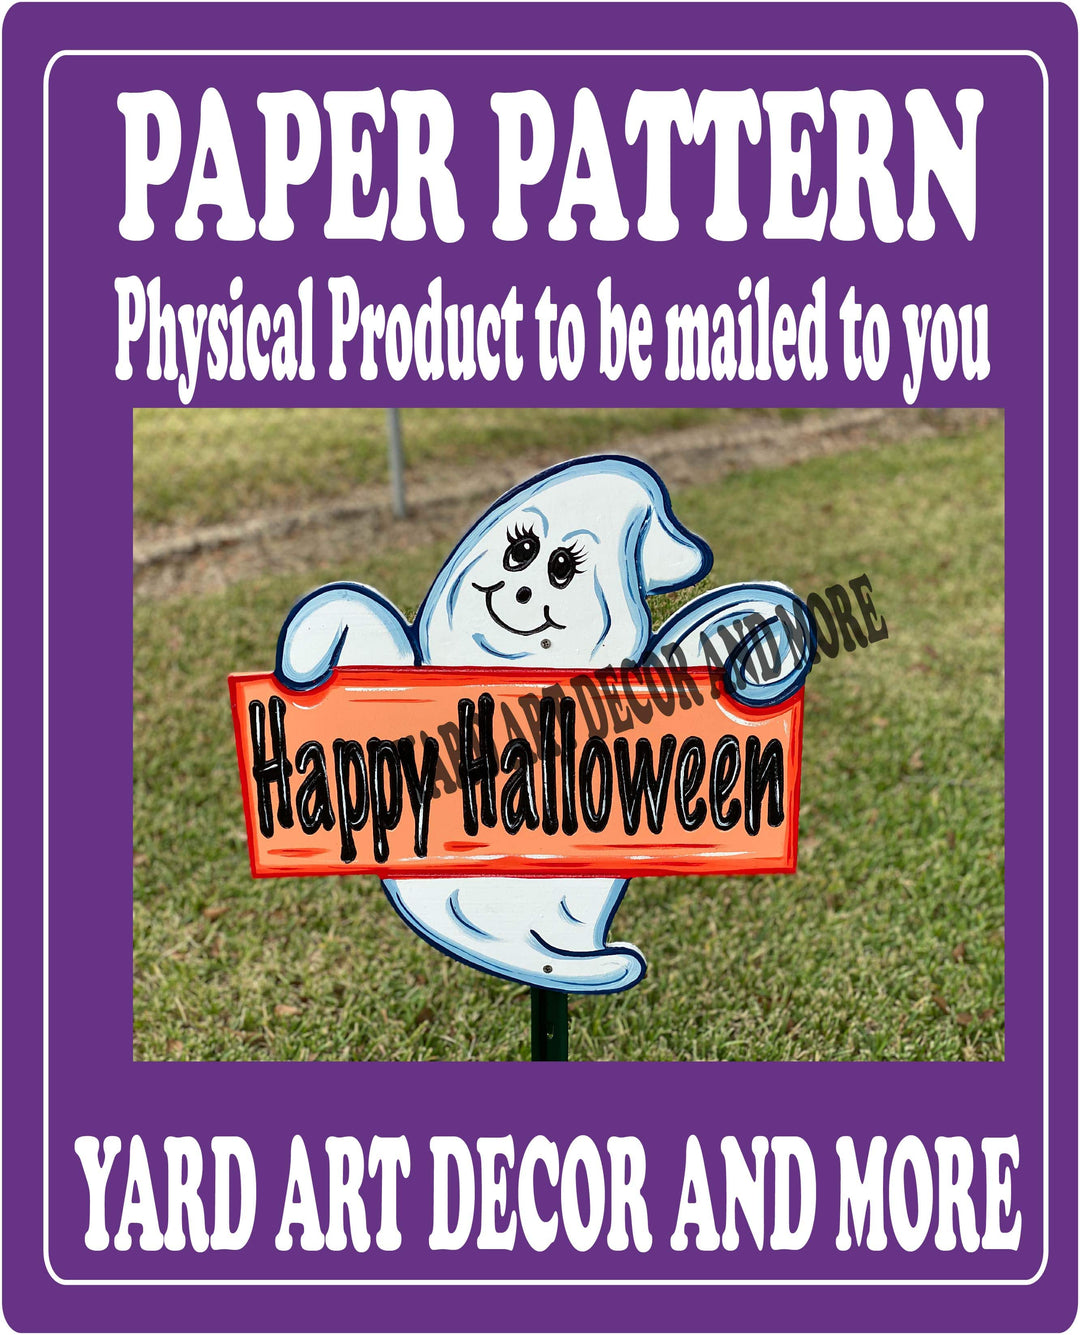 Happy Halloween Ghost yard art decor paper pattern